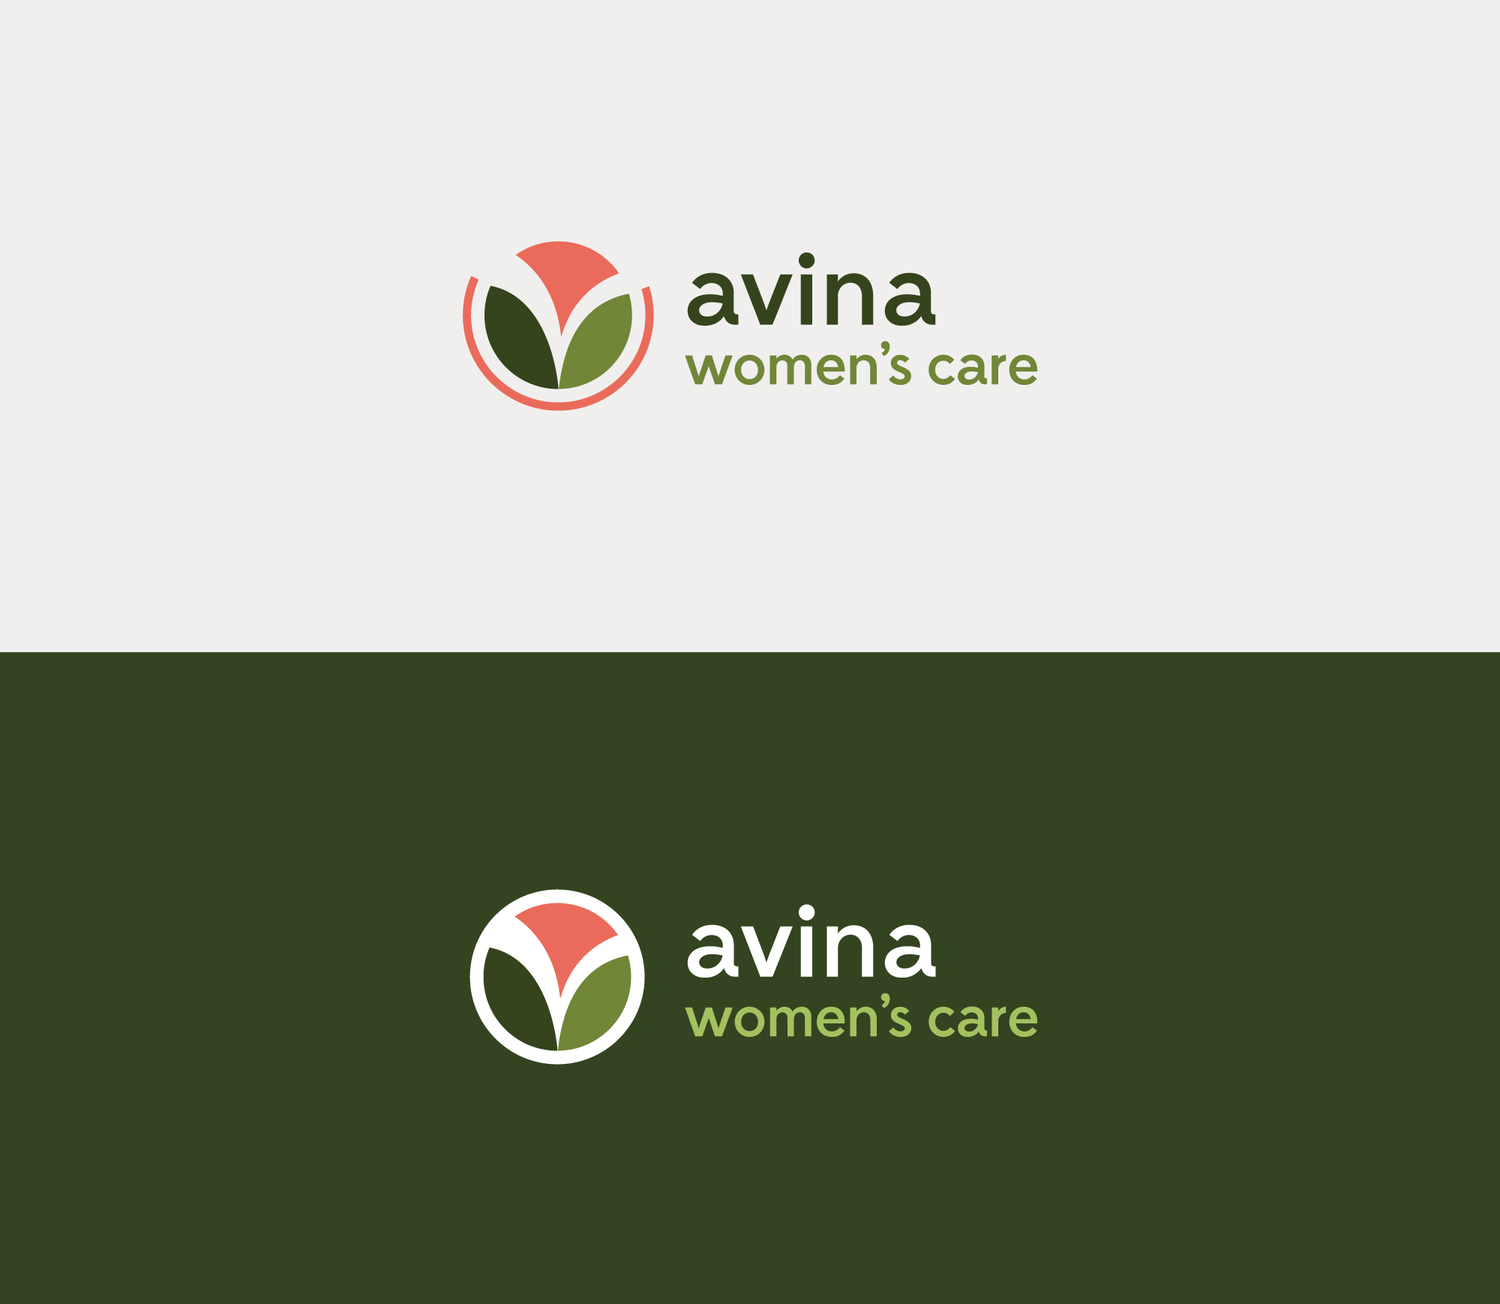 Avina logo both